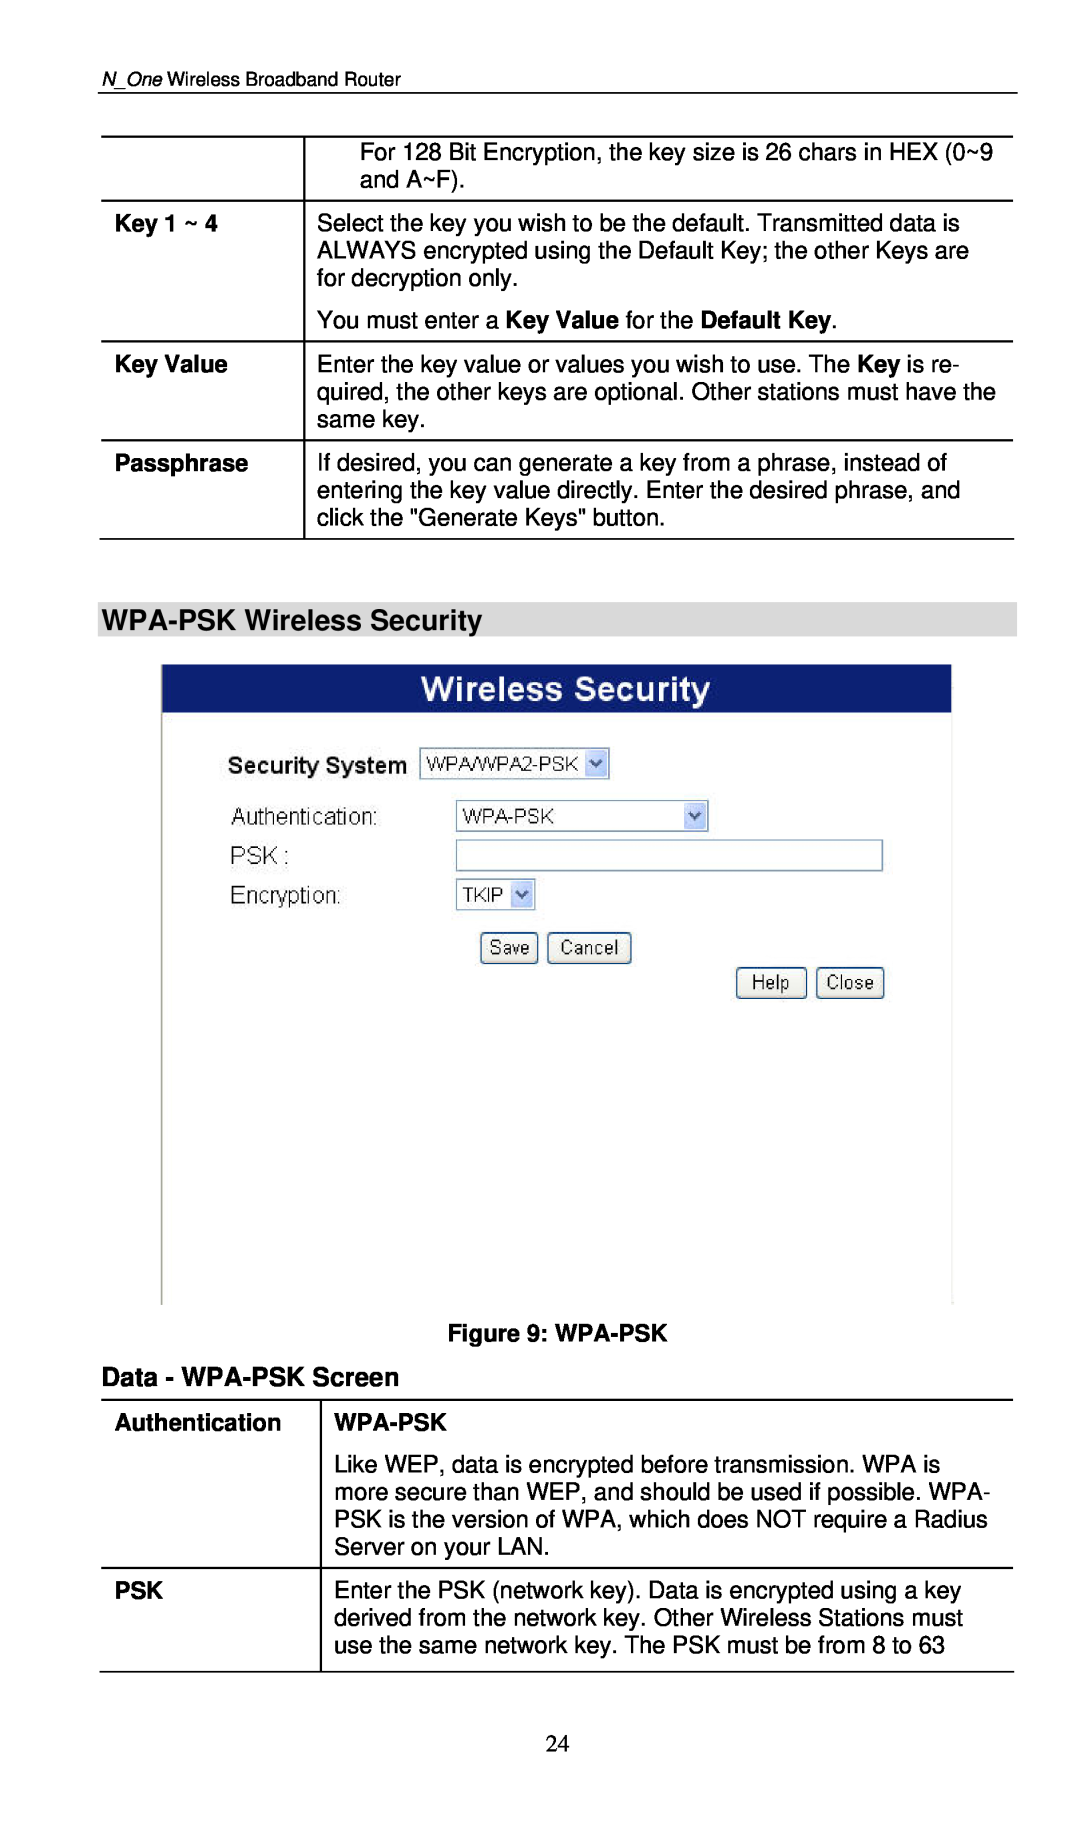 LevelOne WBR-6000 user manual WPA-PSK Wireless Security, Key 1 ~, Key Value, Passphrase, Wpa-Psk, Authentication 